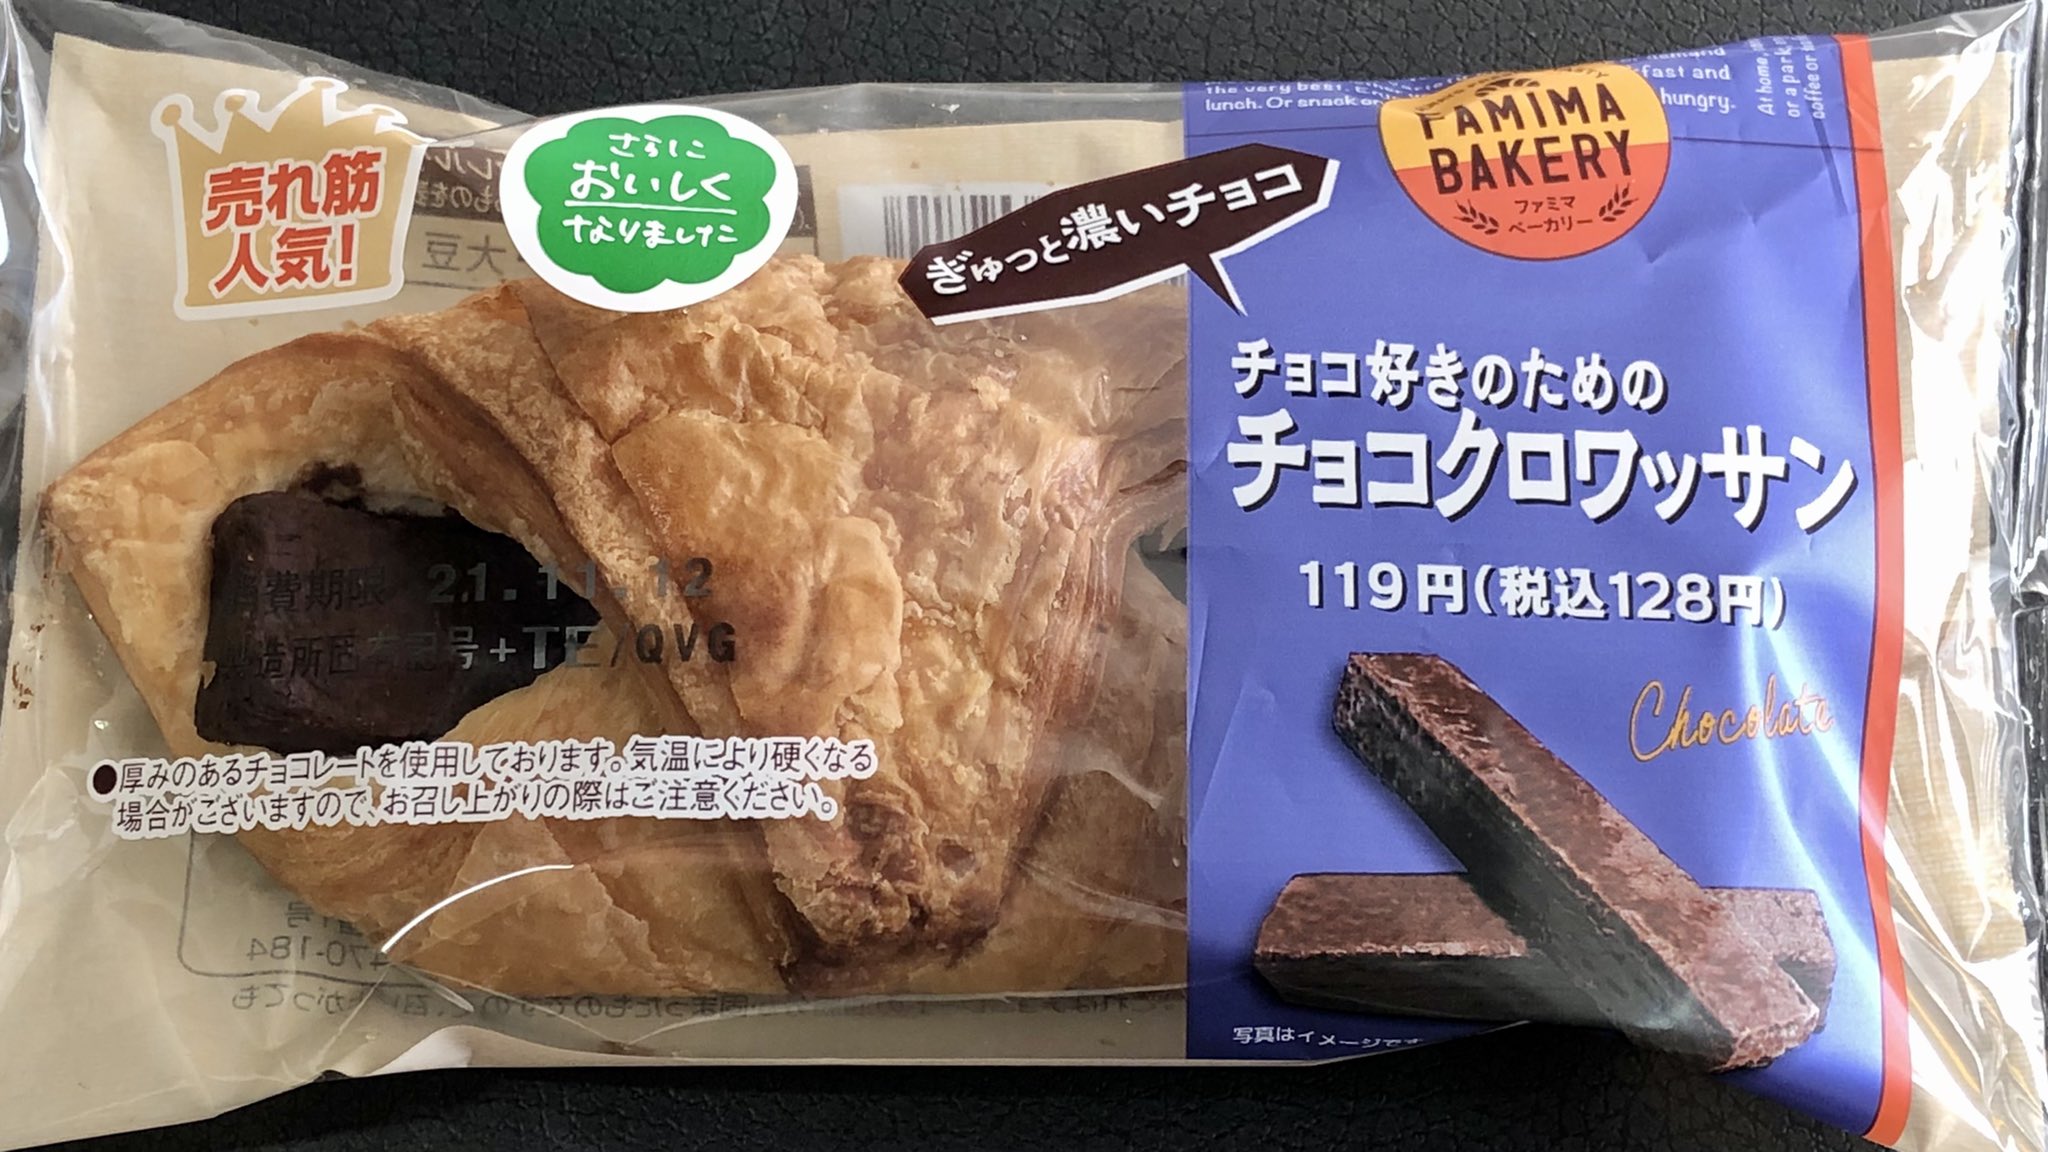 Twitter 上的 ペろまる Oo おはよ ございます Todaymenu ファミマ 神戸屋 チョコ好きのためのチョコクロワッサン 128 375 年間で像100頭分販売した ポリポリ食感の板チョコを歯切れの良い クロワッサンで包んだ